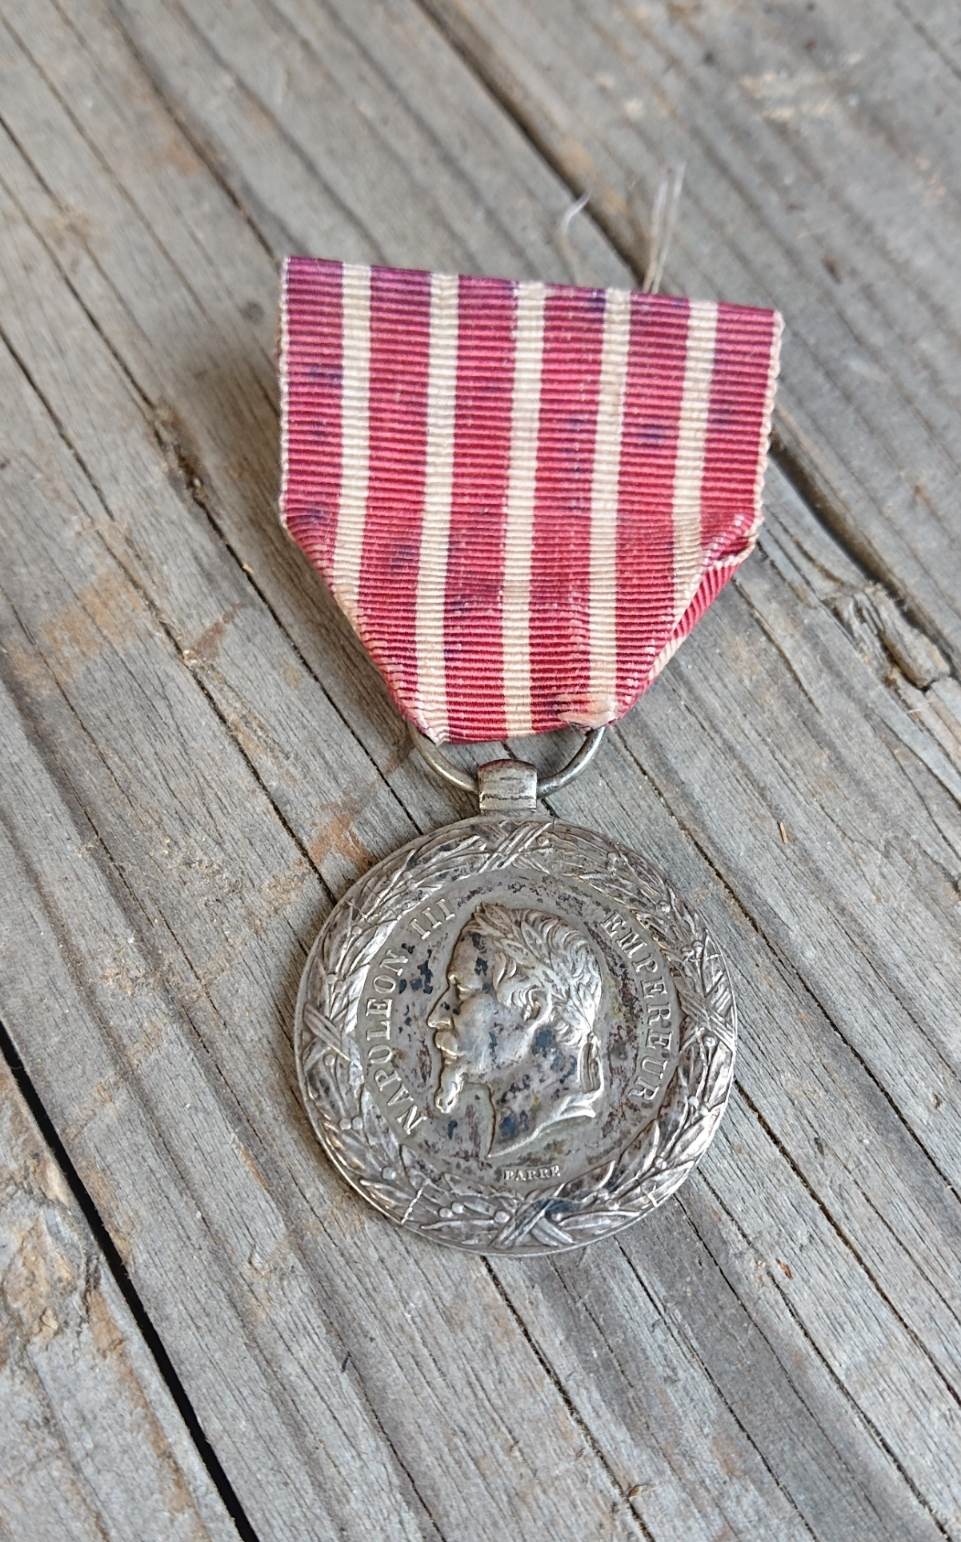 militaria : Médaille campagne d'Italie 1859 / 1859 Italian campaign medal